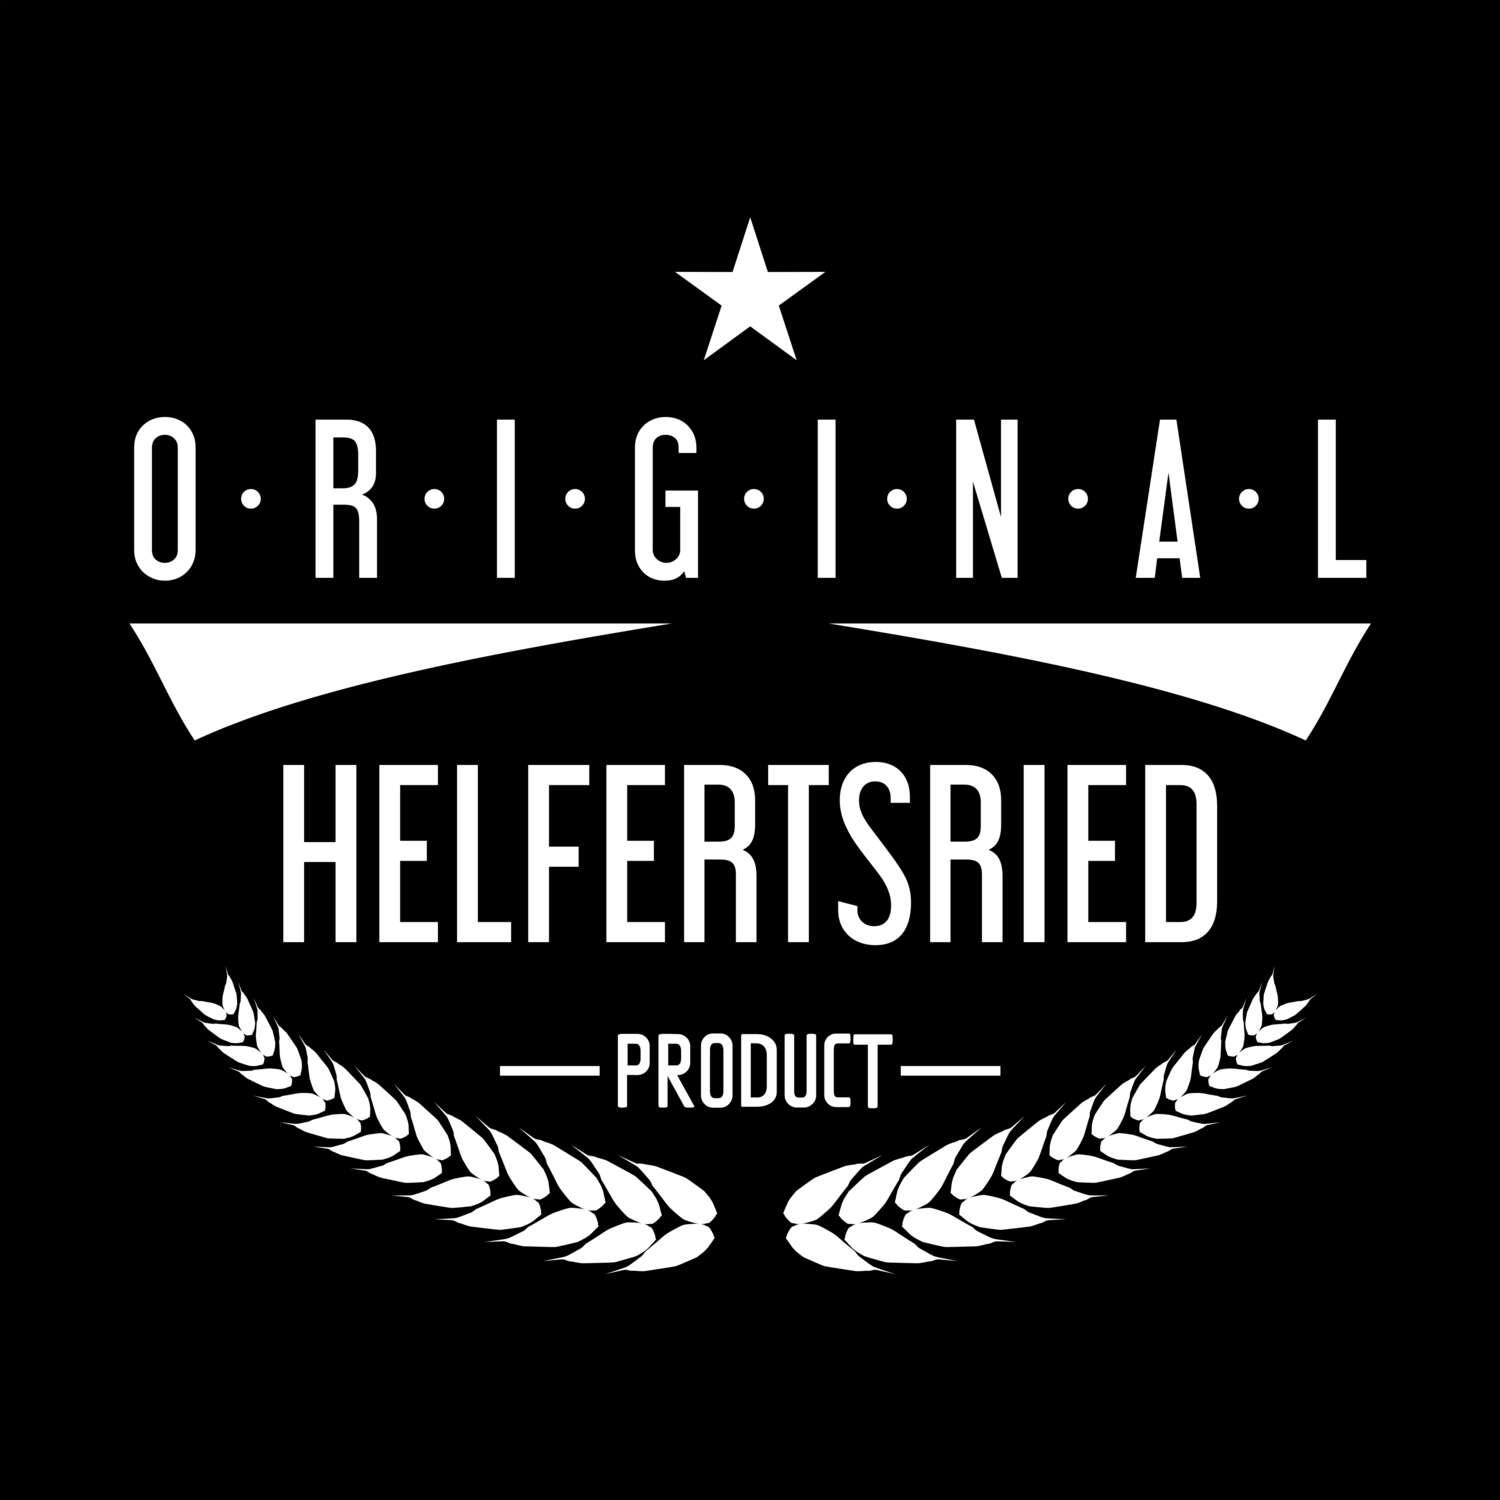 Helfertsried T-Shirt »Original Product«